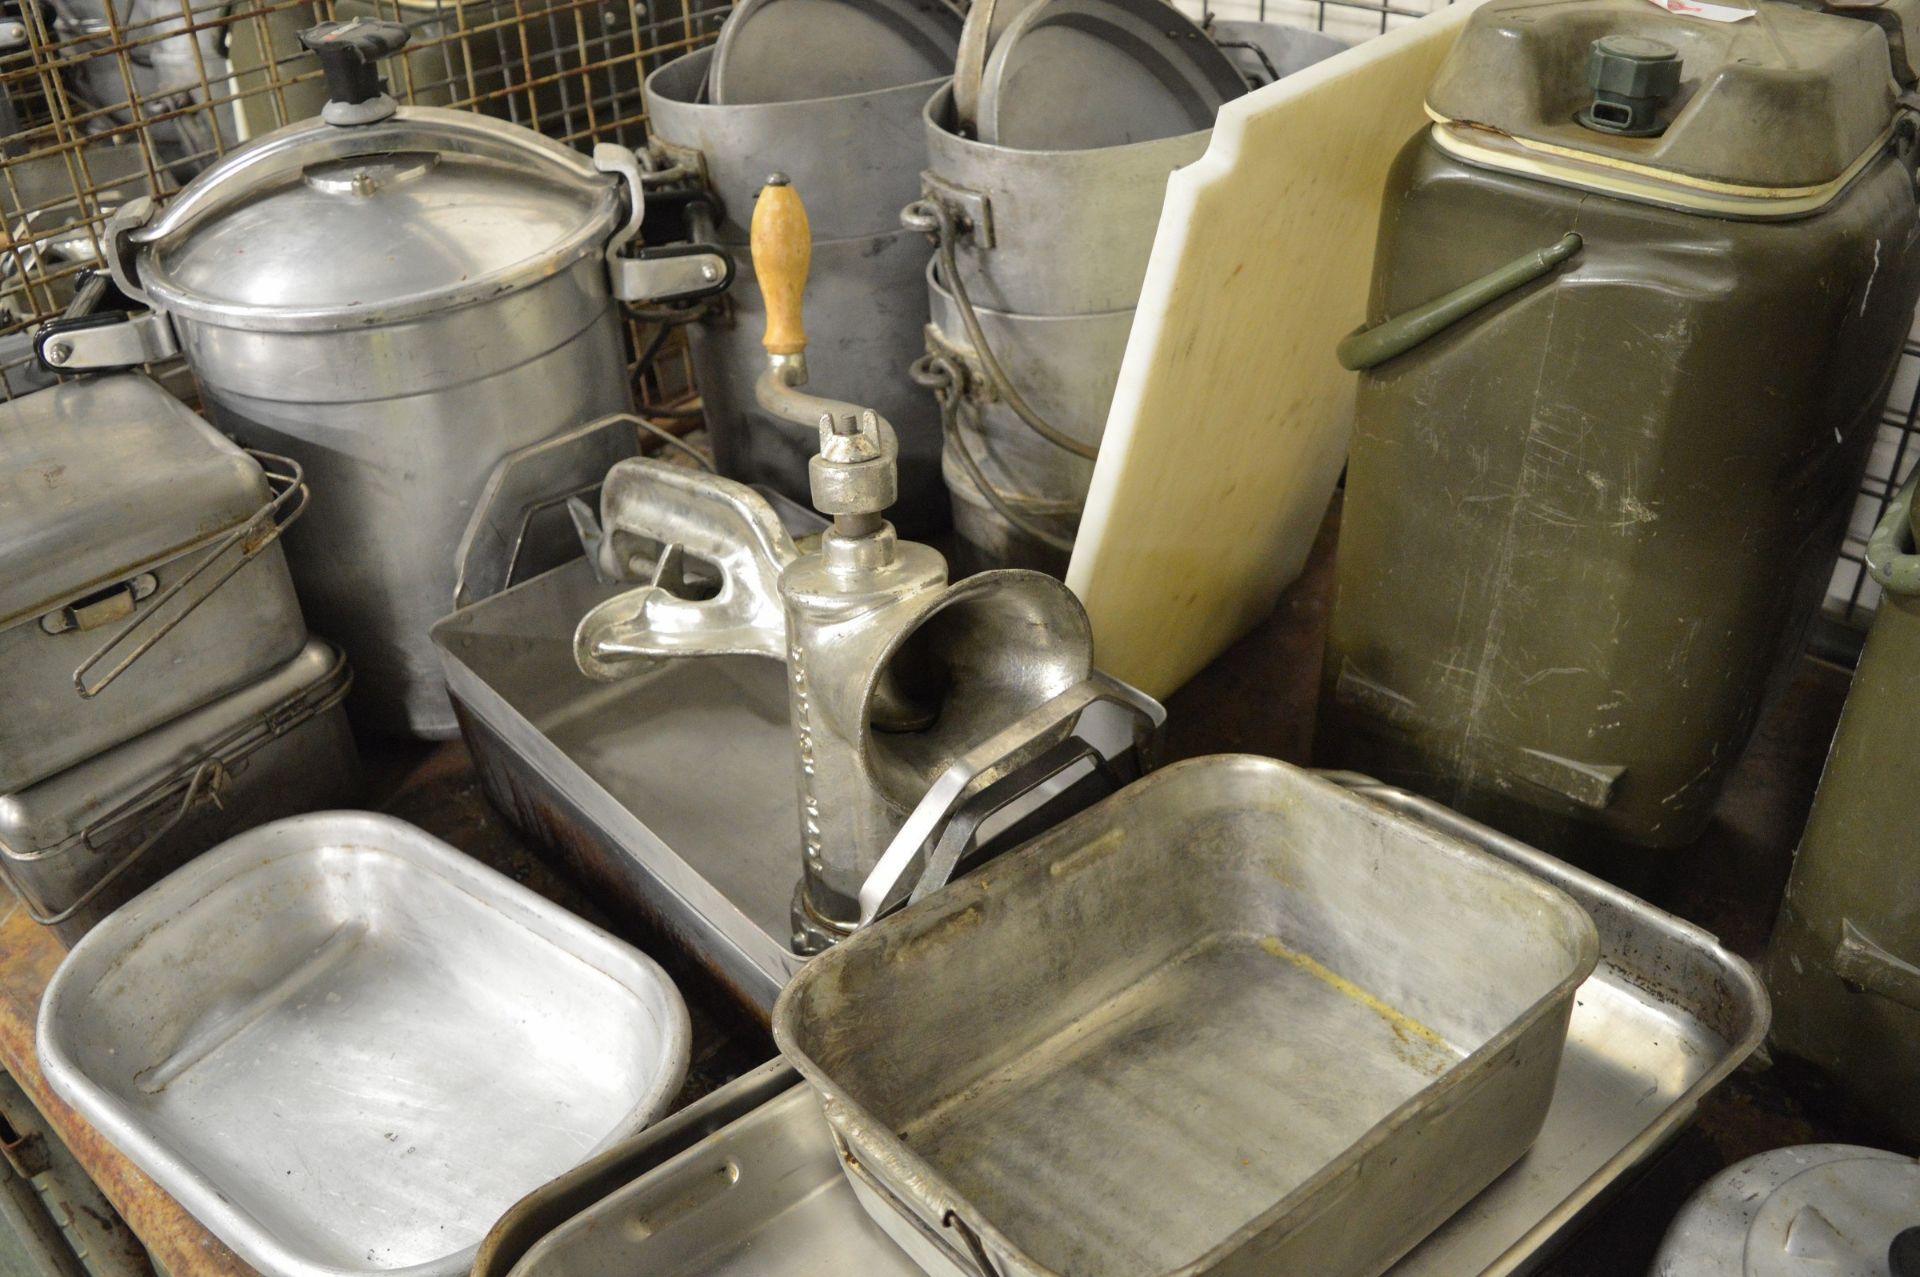 Field Catering Kit - Cooker. Oven, Utensils in storage box, pots, pans, norweigen food box - Image 3 of 6